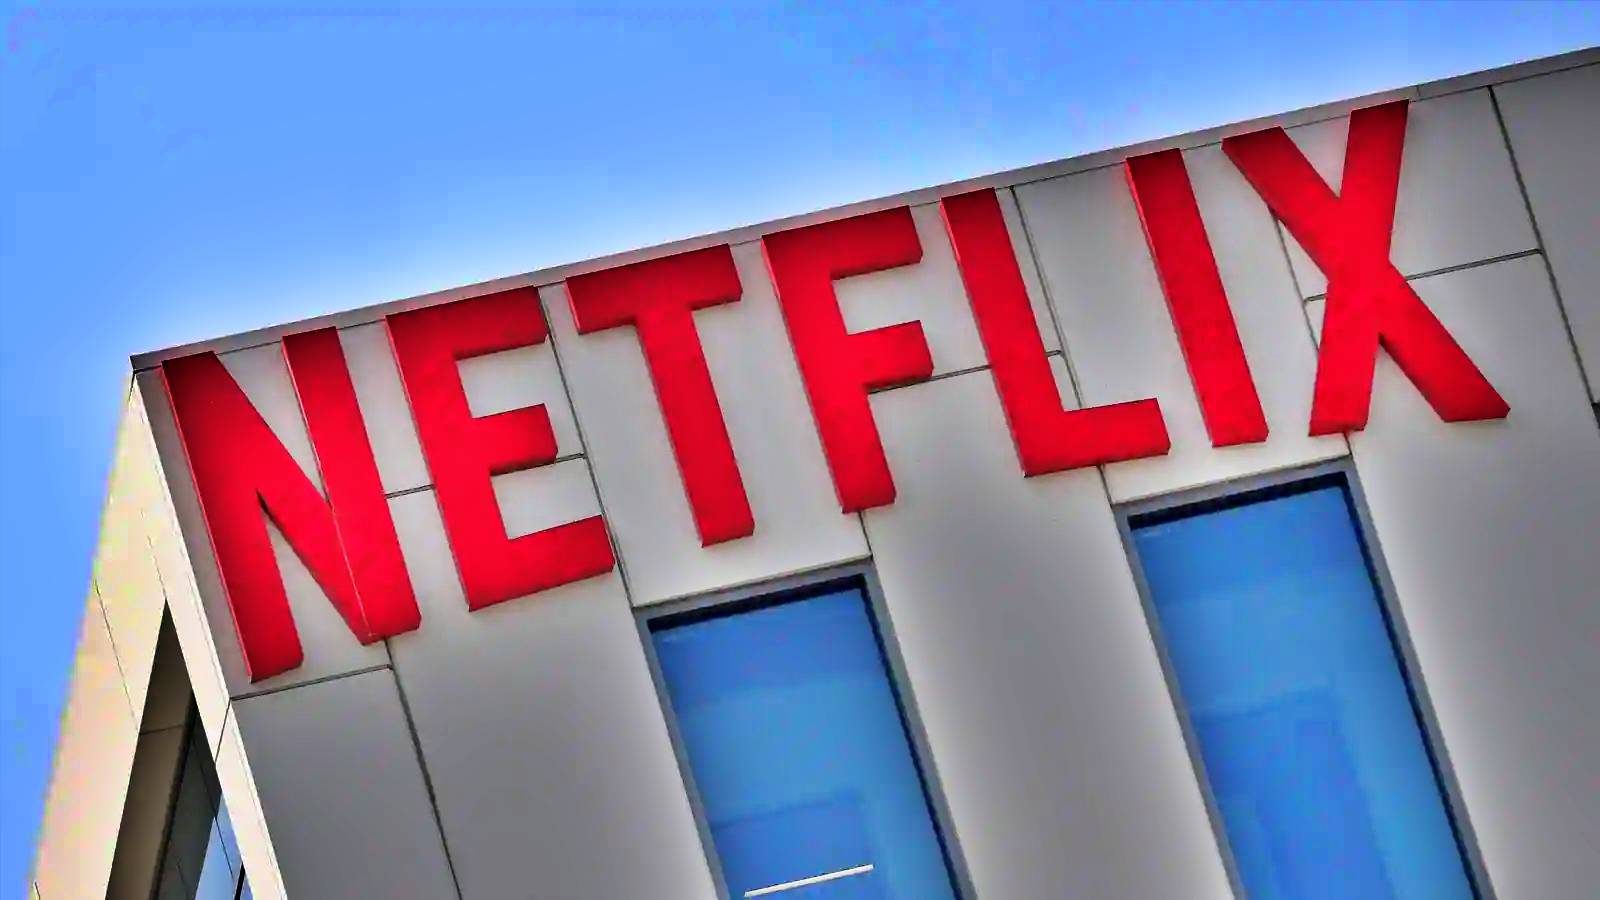 Netflix Saptamana Extrem Importanta Viitorul Platformei Streaming VOD